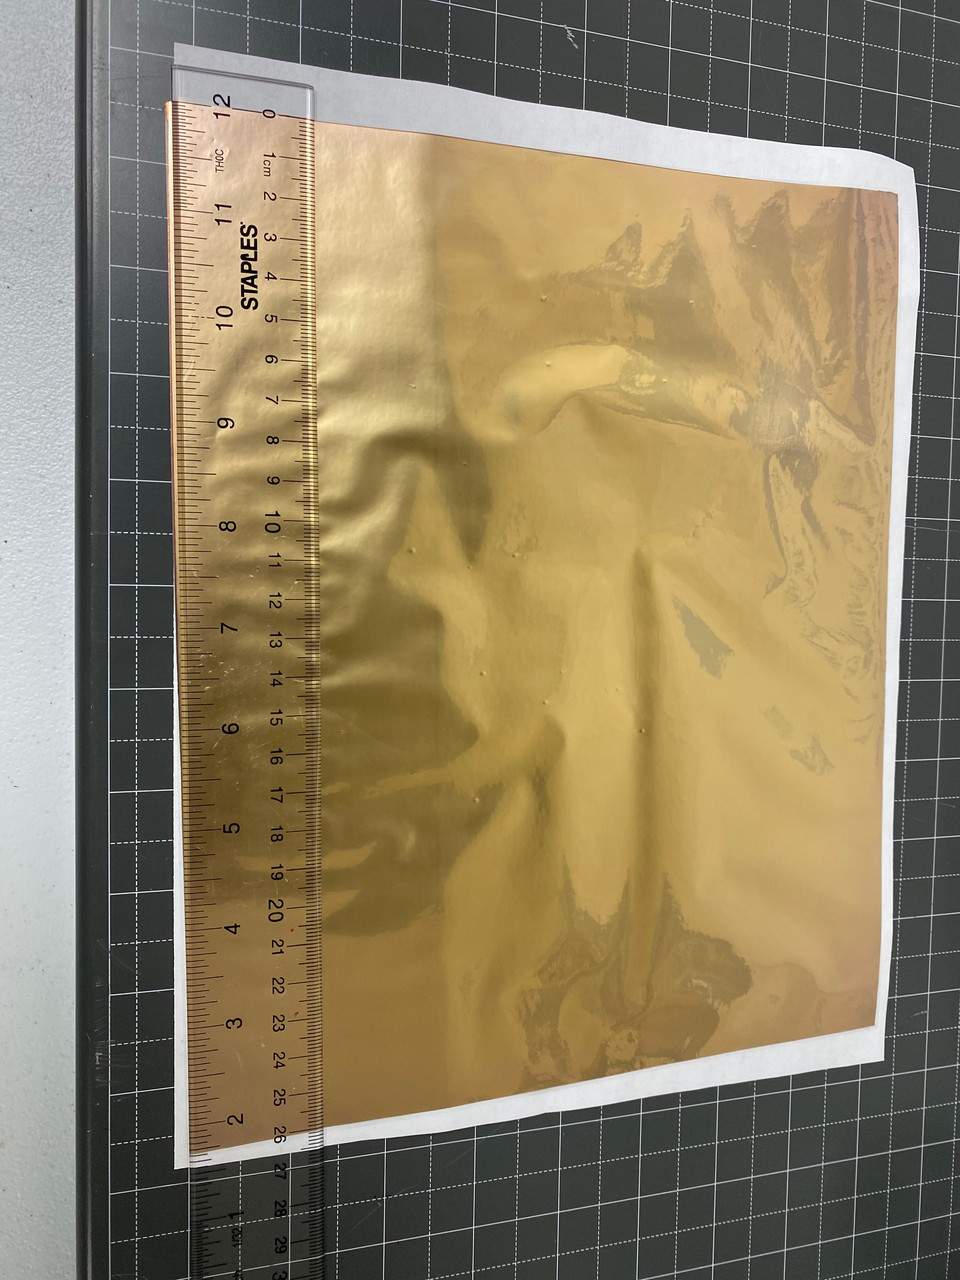 PVDF-TrFE piezo film with gold electrode (fully covered), 3 um to 100 um, 100 x 100 mm Ultrasound Fingerprint Sensor